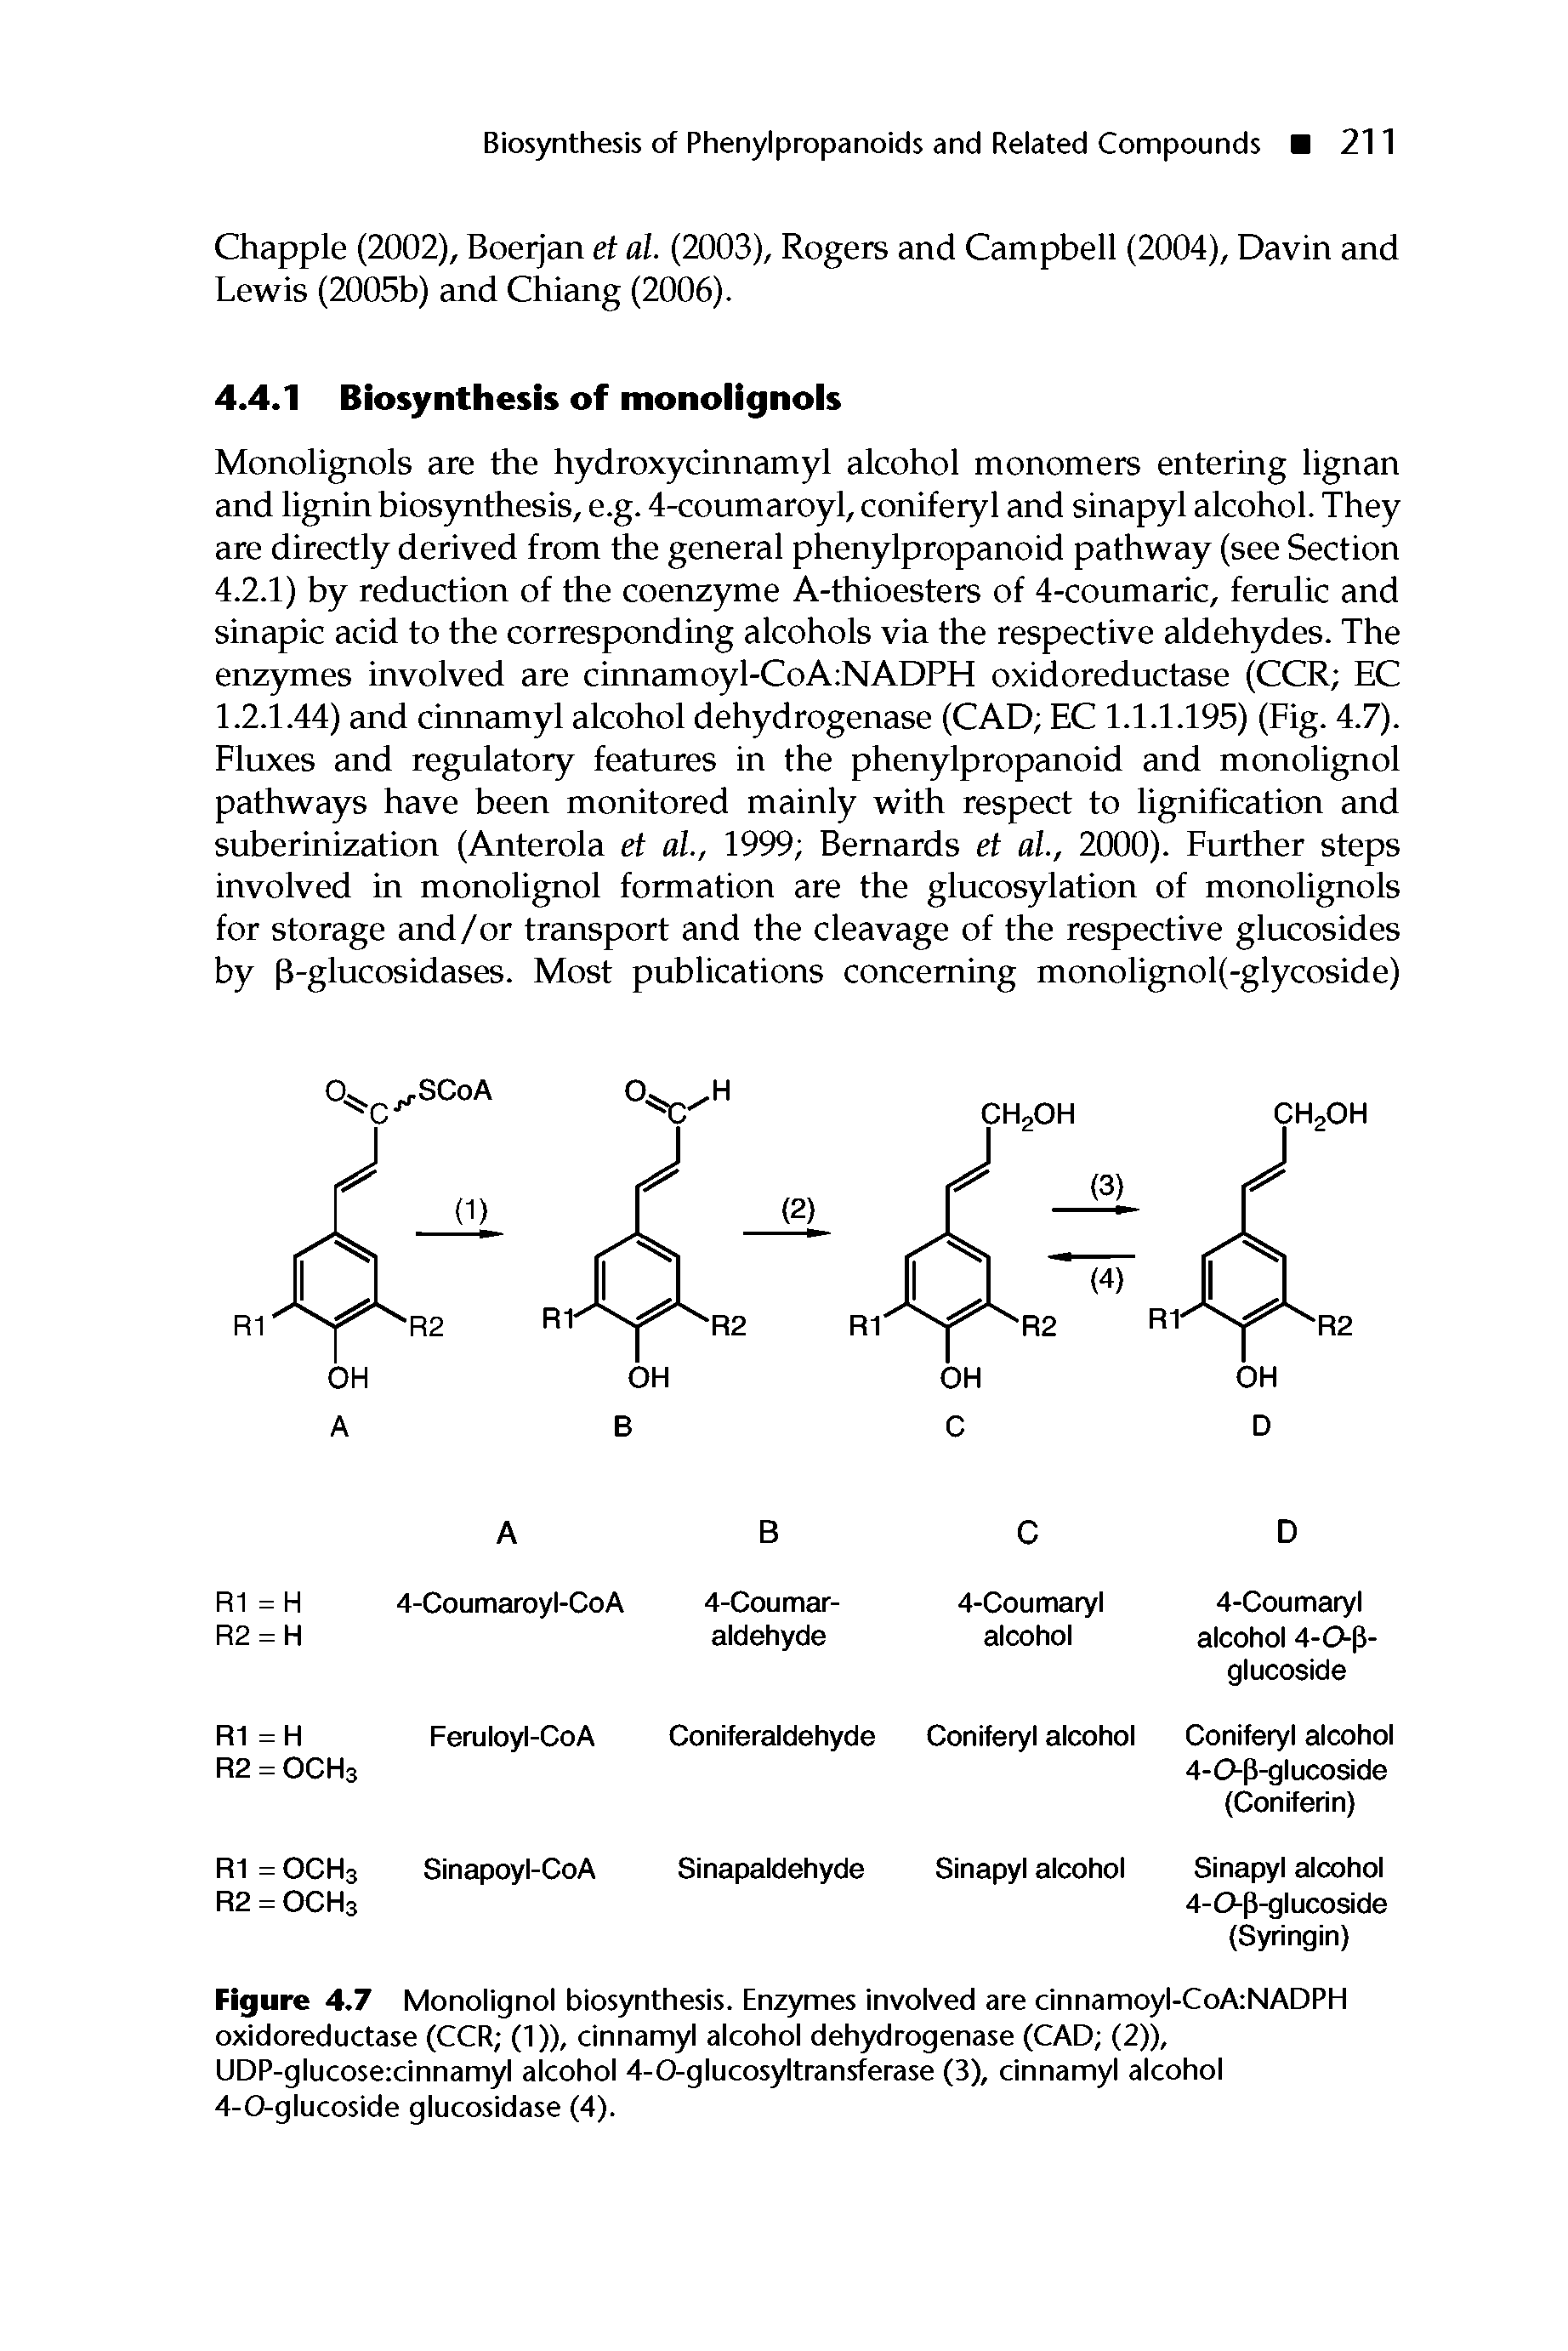 Figure 4.7 Monolignol biosynthesis. Enzymes involved are cinnamoyl-CoAiNADPH oxidoreductase (CCR (1)), cinnamyl alcohol dehydrogenase (CAD (2)), UDP-glucose cinnamyl alcohol 4-0-glucosyltransferase (3), cinnamyl alcohol 4-0-glucoside glucosidase (4).